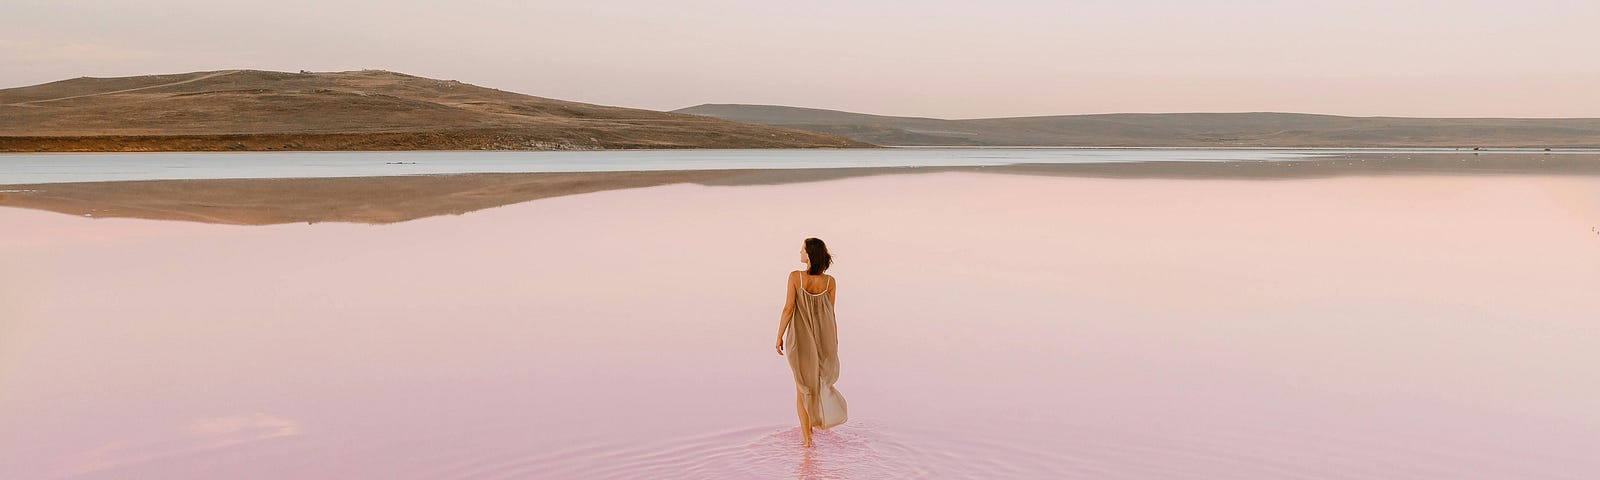 Woman walking in pink water